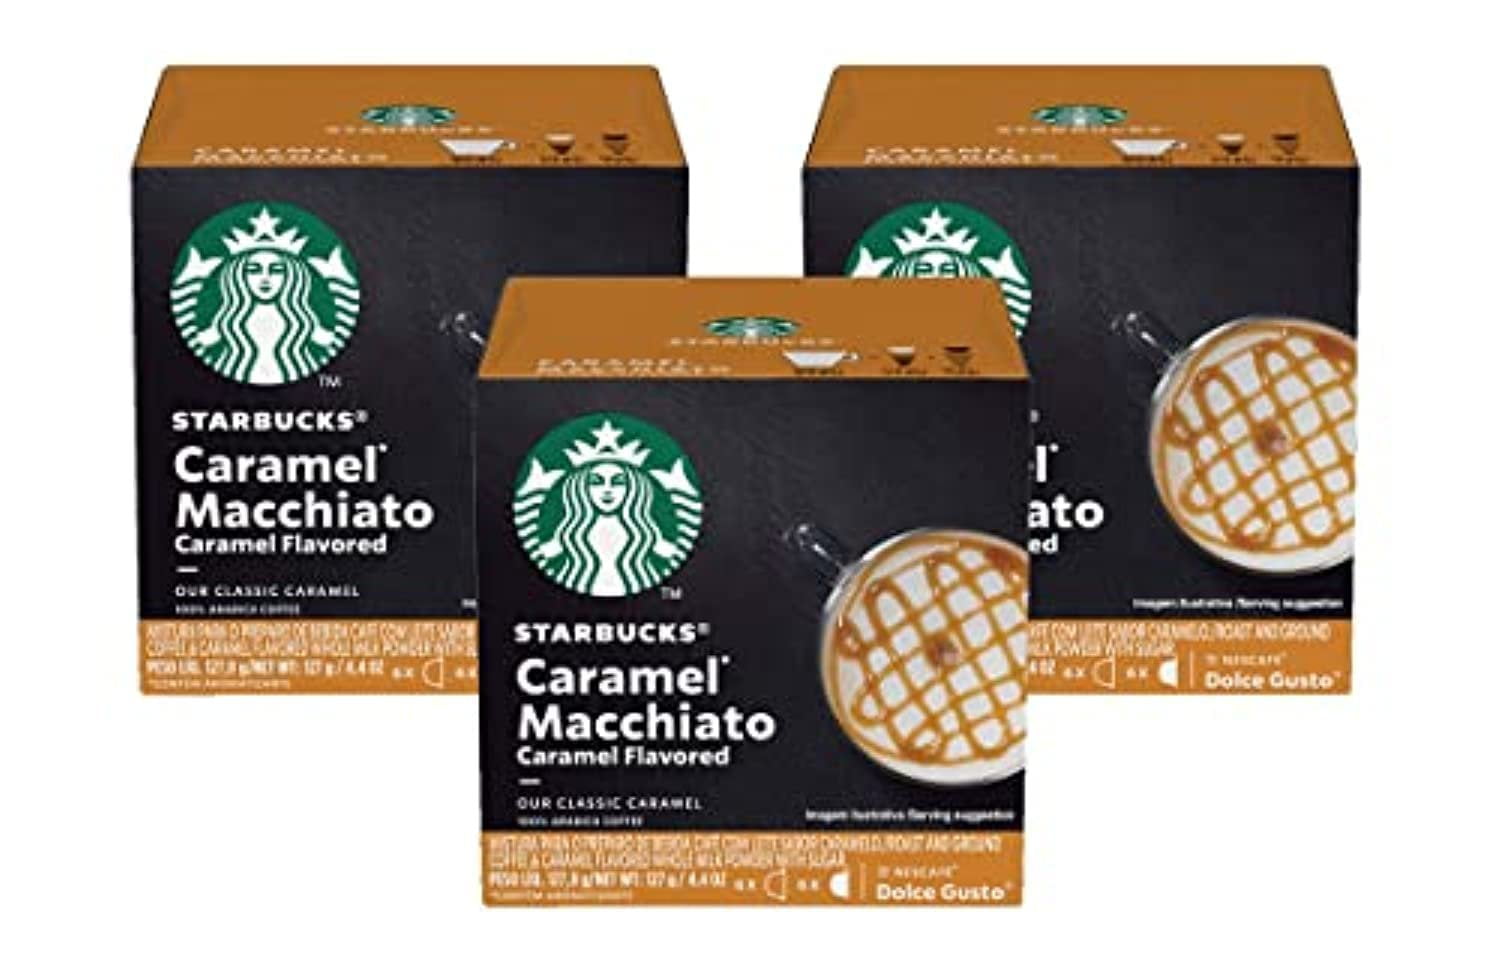  Nescafe Dolce Gusto - Cápsulas de café, americano, 16 cápsulas,  paquete de 3 : Comida Gourmet y Alimentos